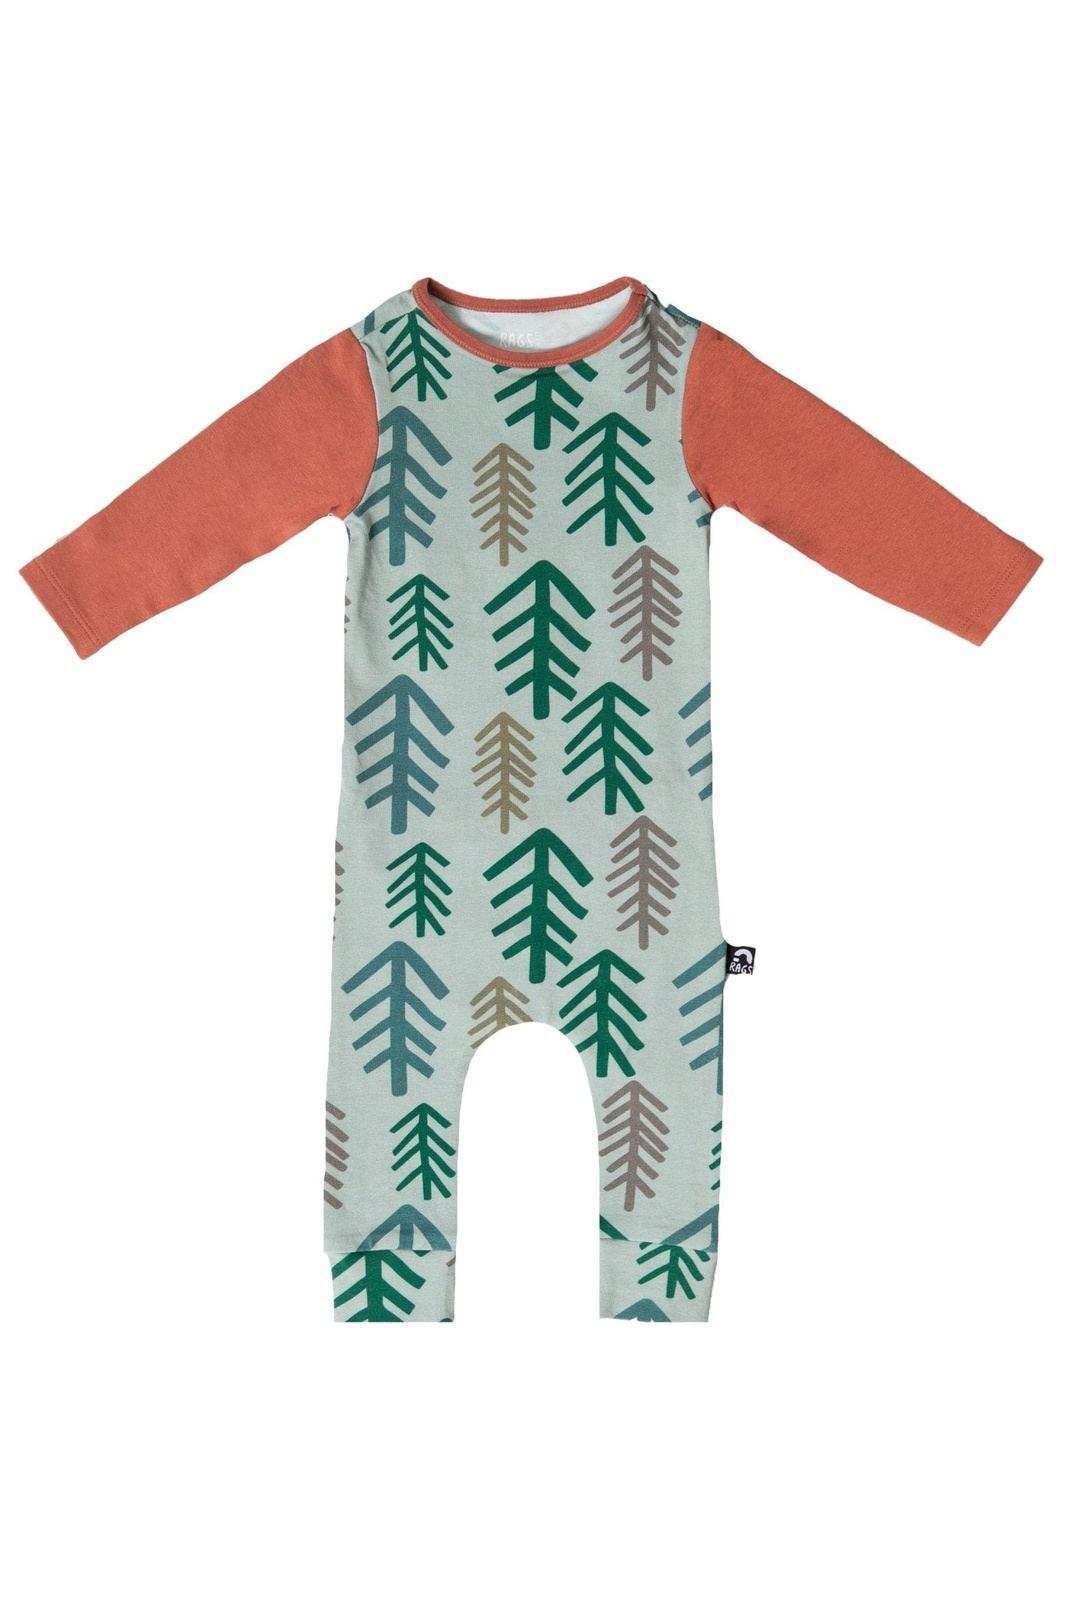 Infant Rag Romper - 'Simple Trees' - Tea for Three: A Children's Boutique-New Arrivals-TheT43Shop